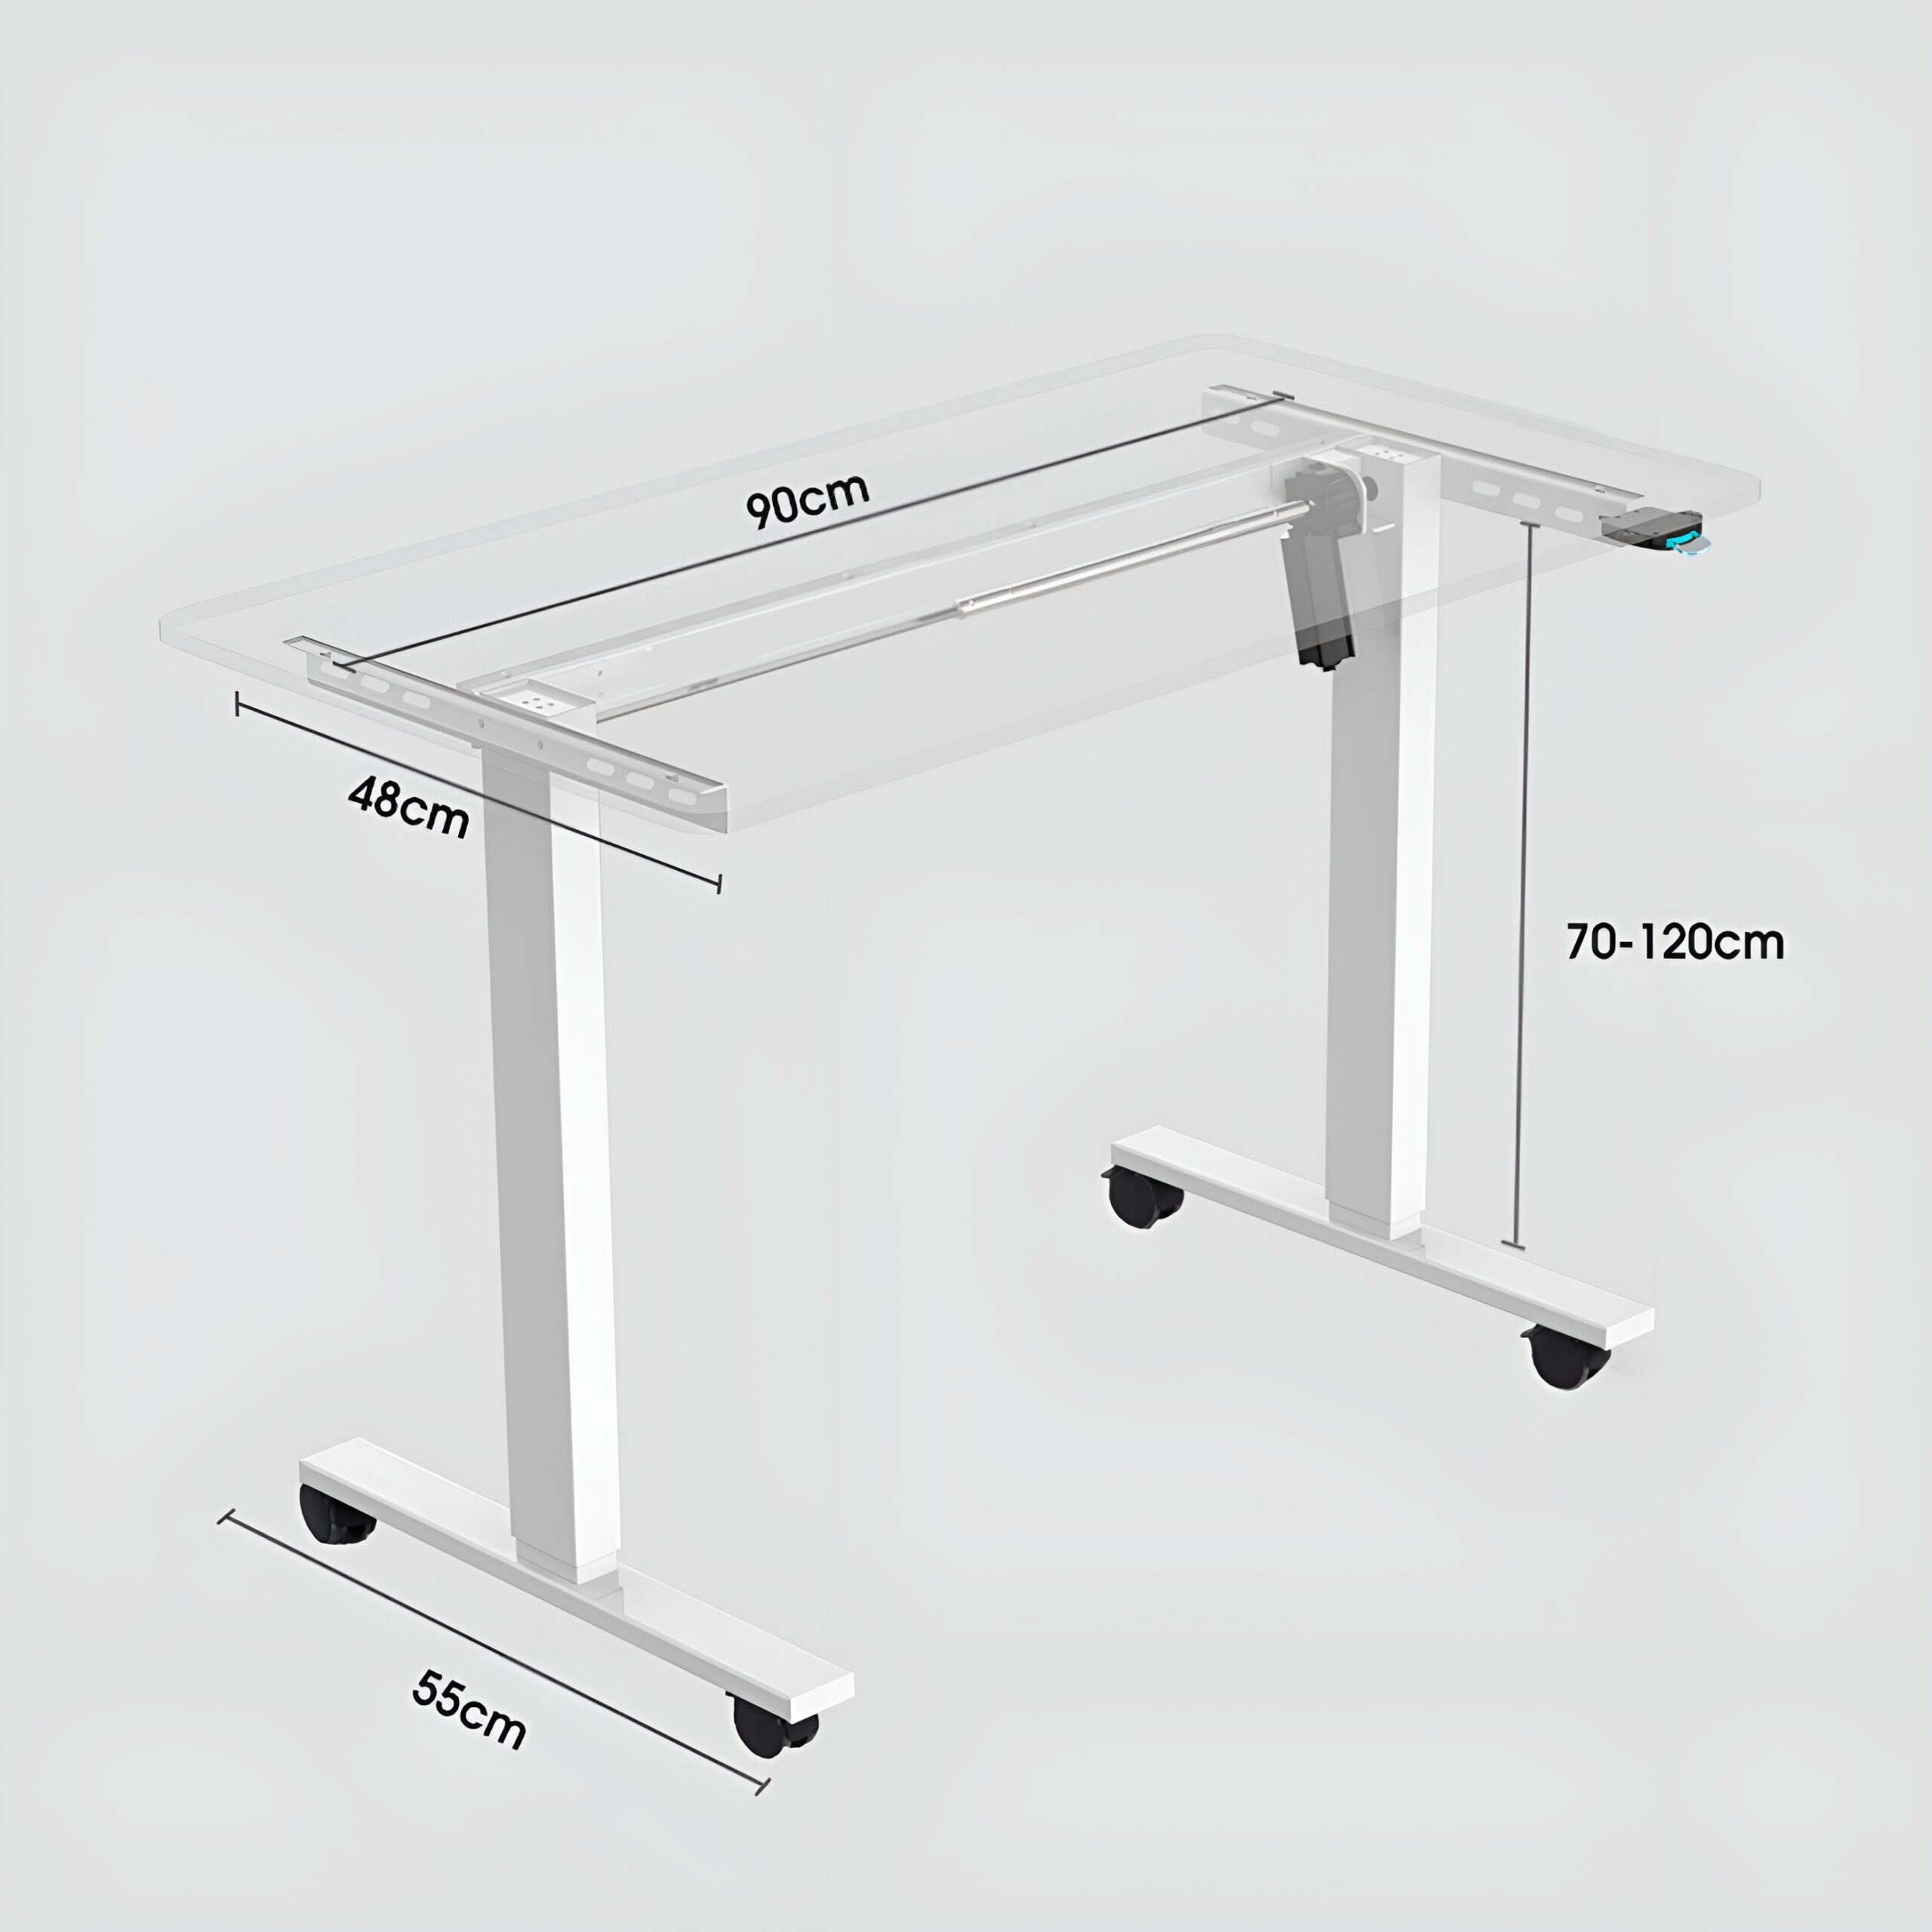 Electric height-adjustable standing desk VFET01